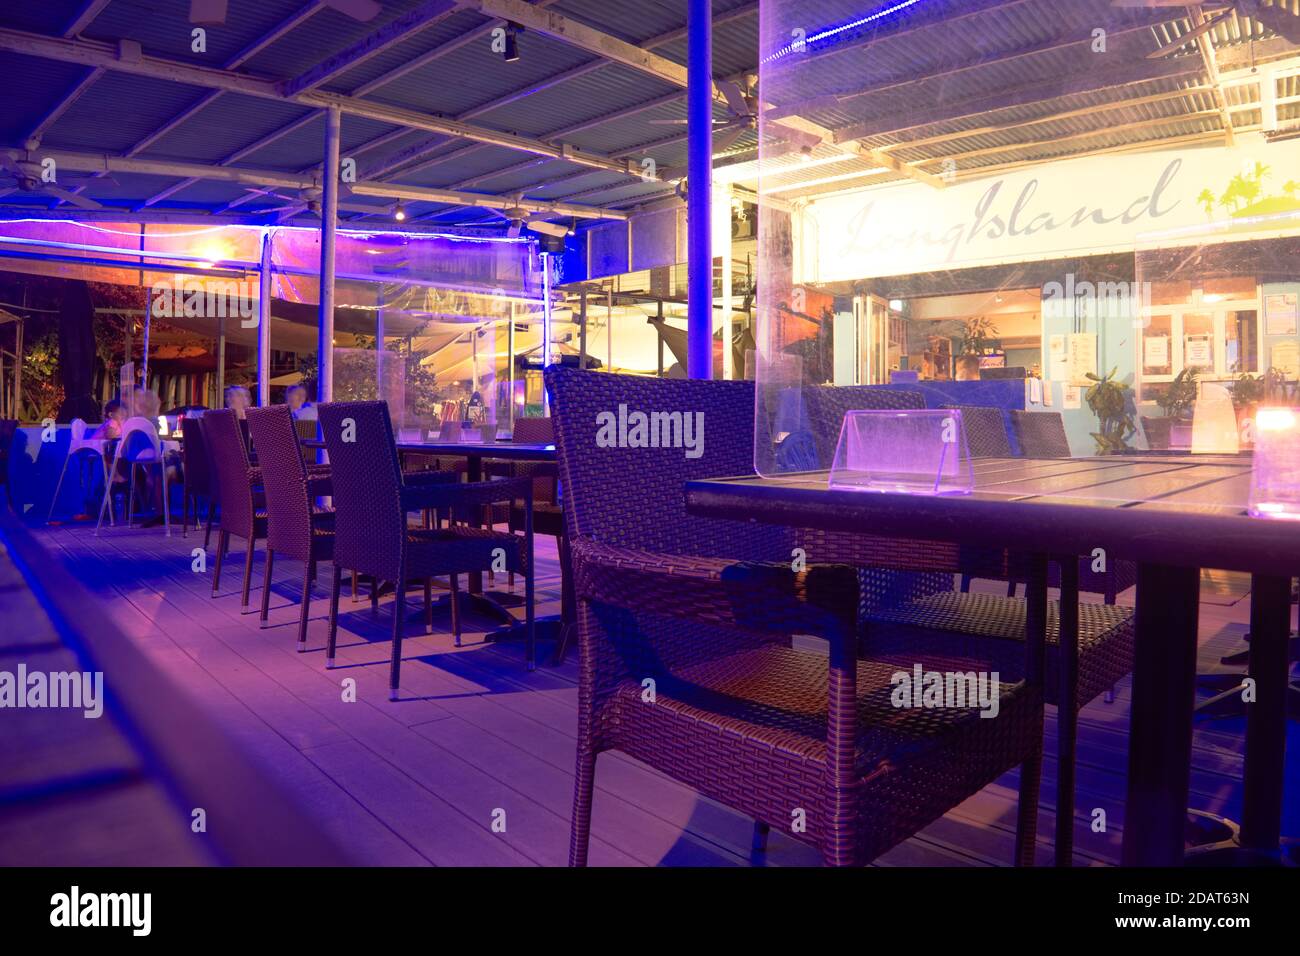 Lantau Island, Hong Kong - 5 Nov 2020: Inner view of western restaurant with blue neon light setting Stock Photo